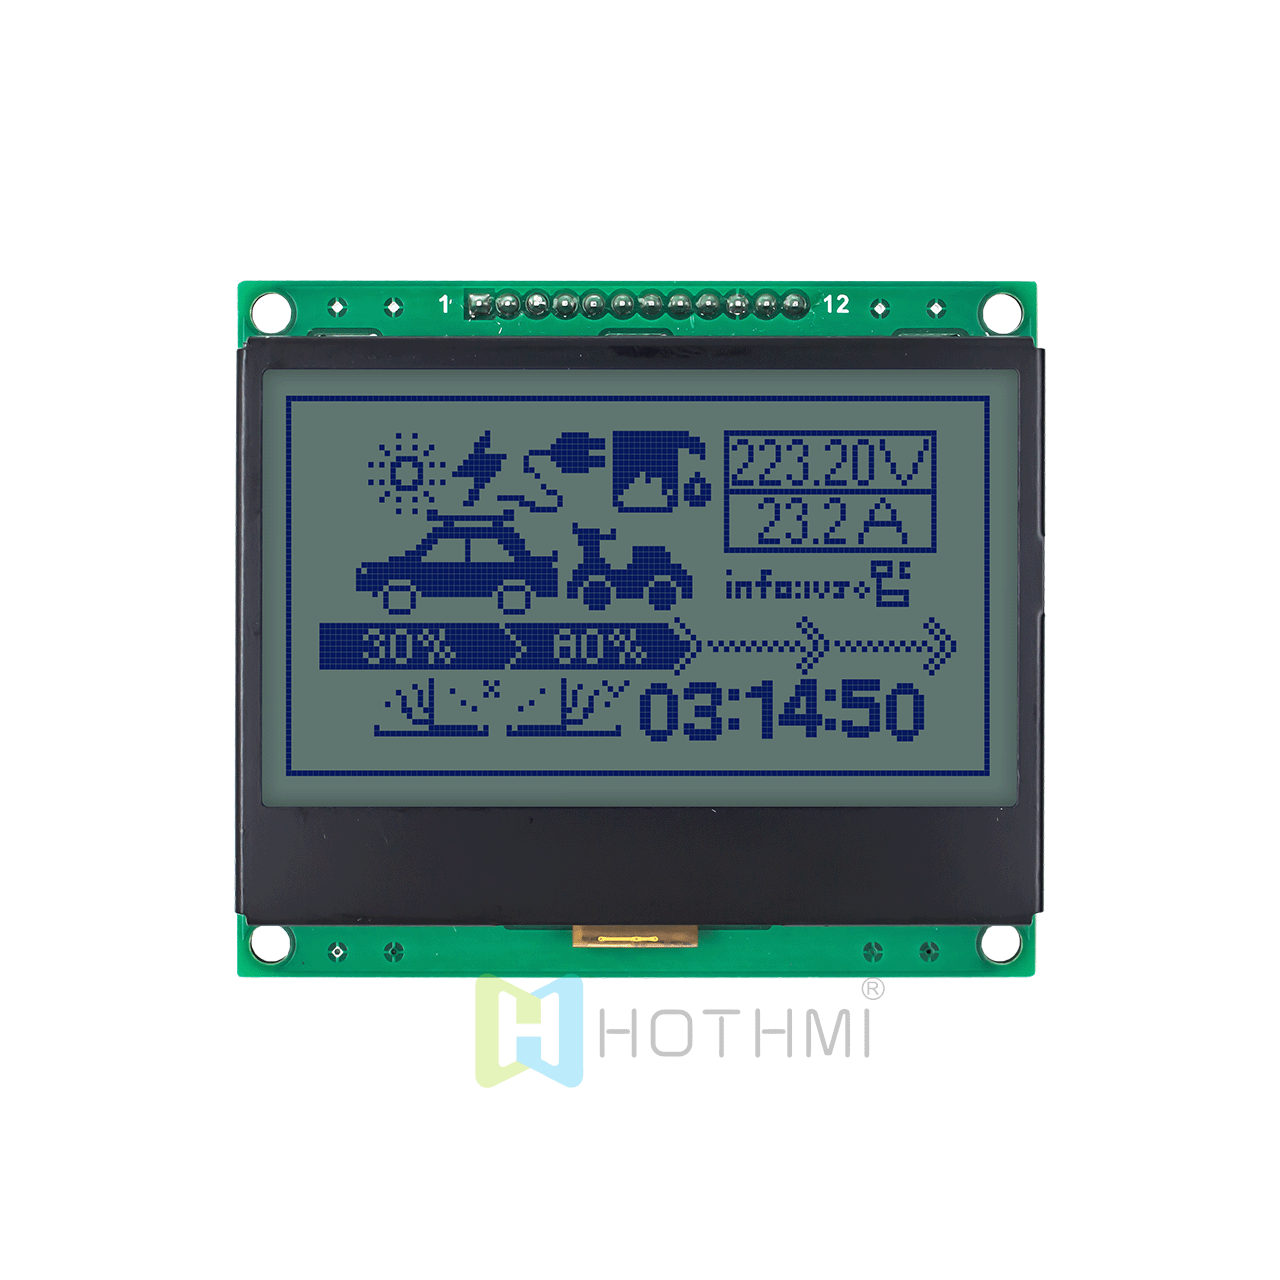 128x64 Graphic LCD Display Module | 3 Inch Graphic LCD Display Module | 128x64 Graphic LCD Module | 3.3V | Blue on Gray | STN + White Backlight | Adruino